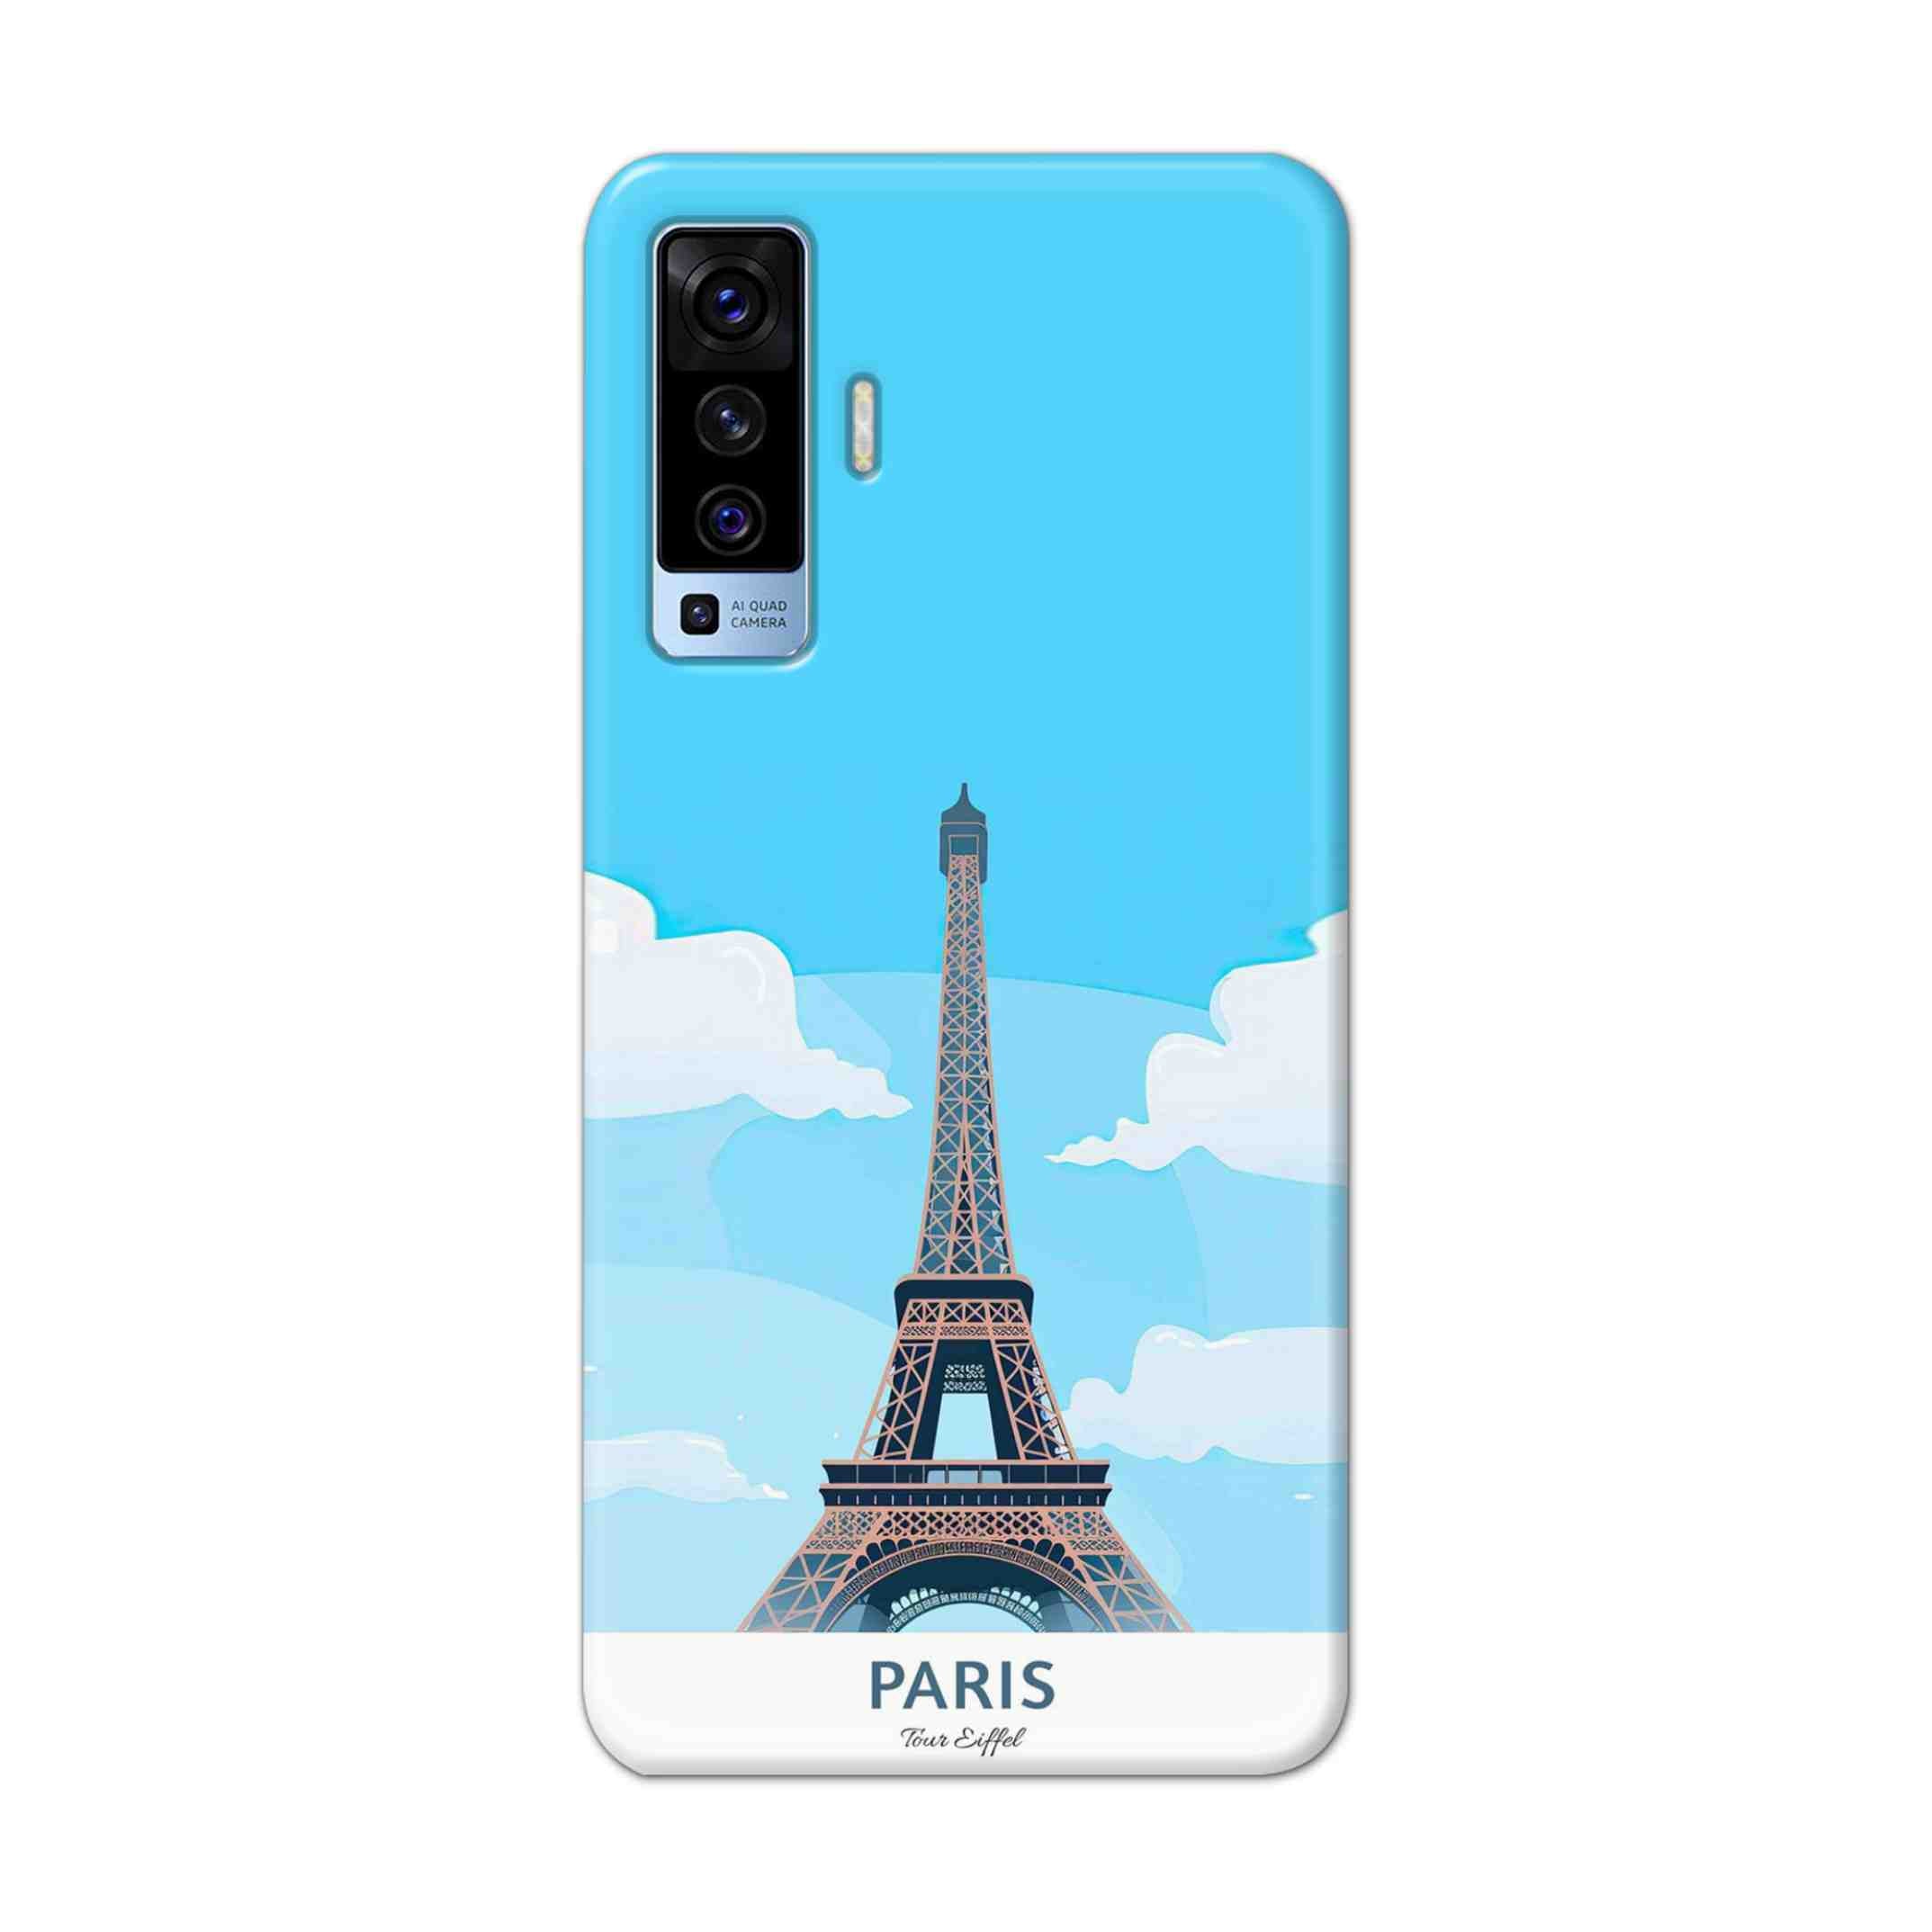 Buy Paris Hard Back Mobile Phone Case Cover For Vivo X50 Online